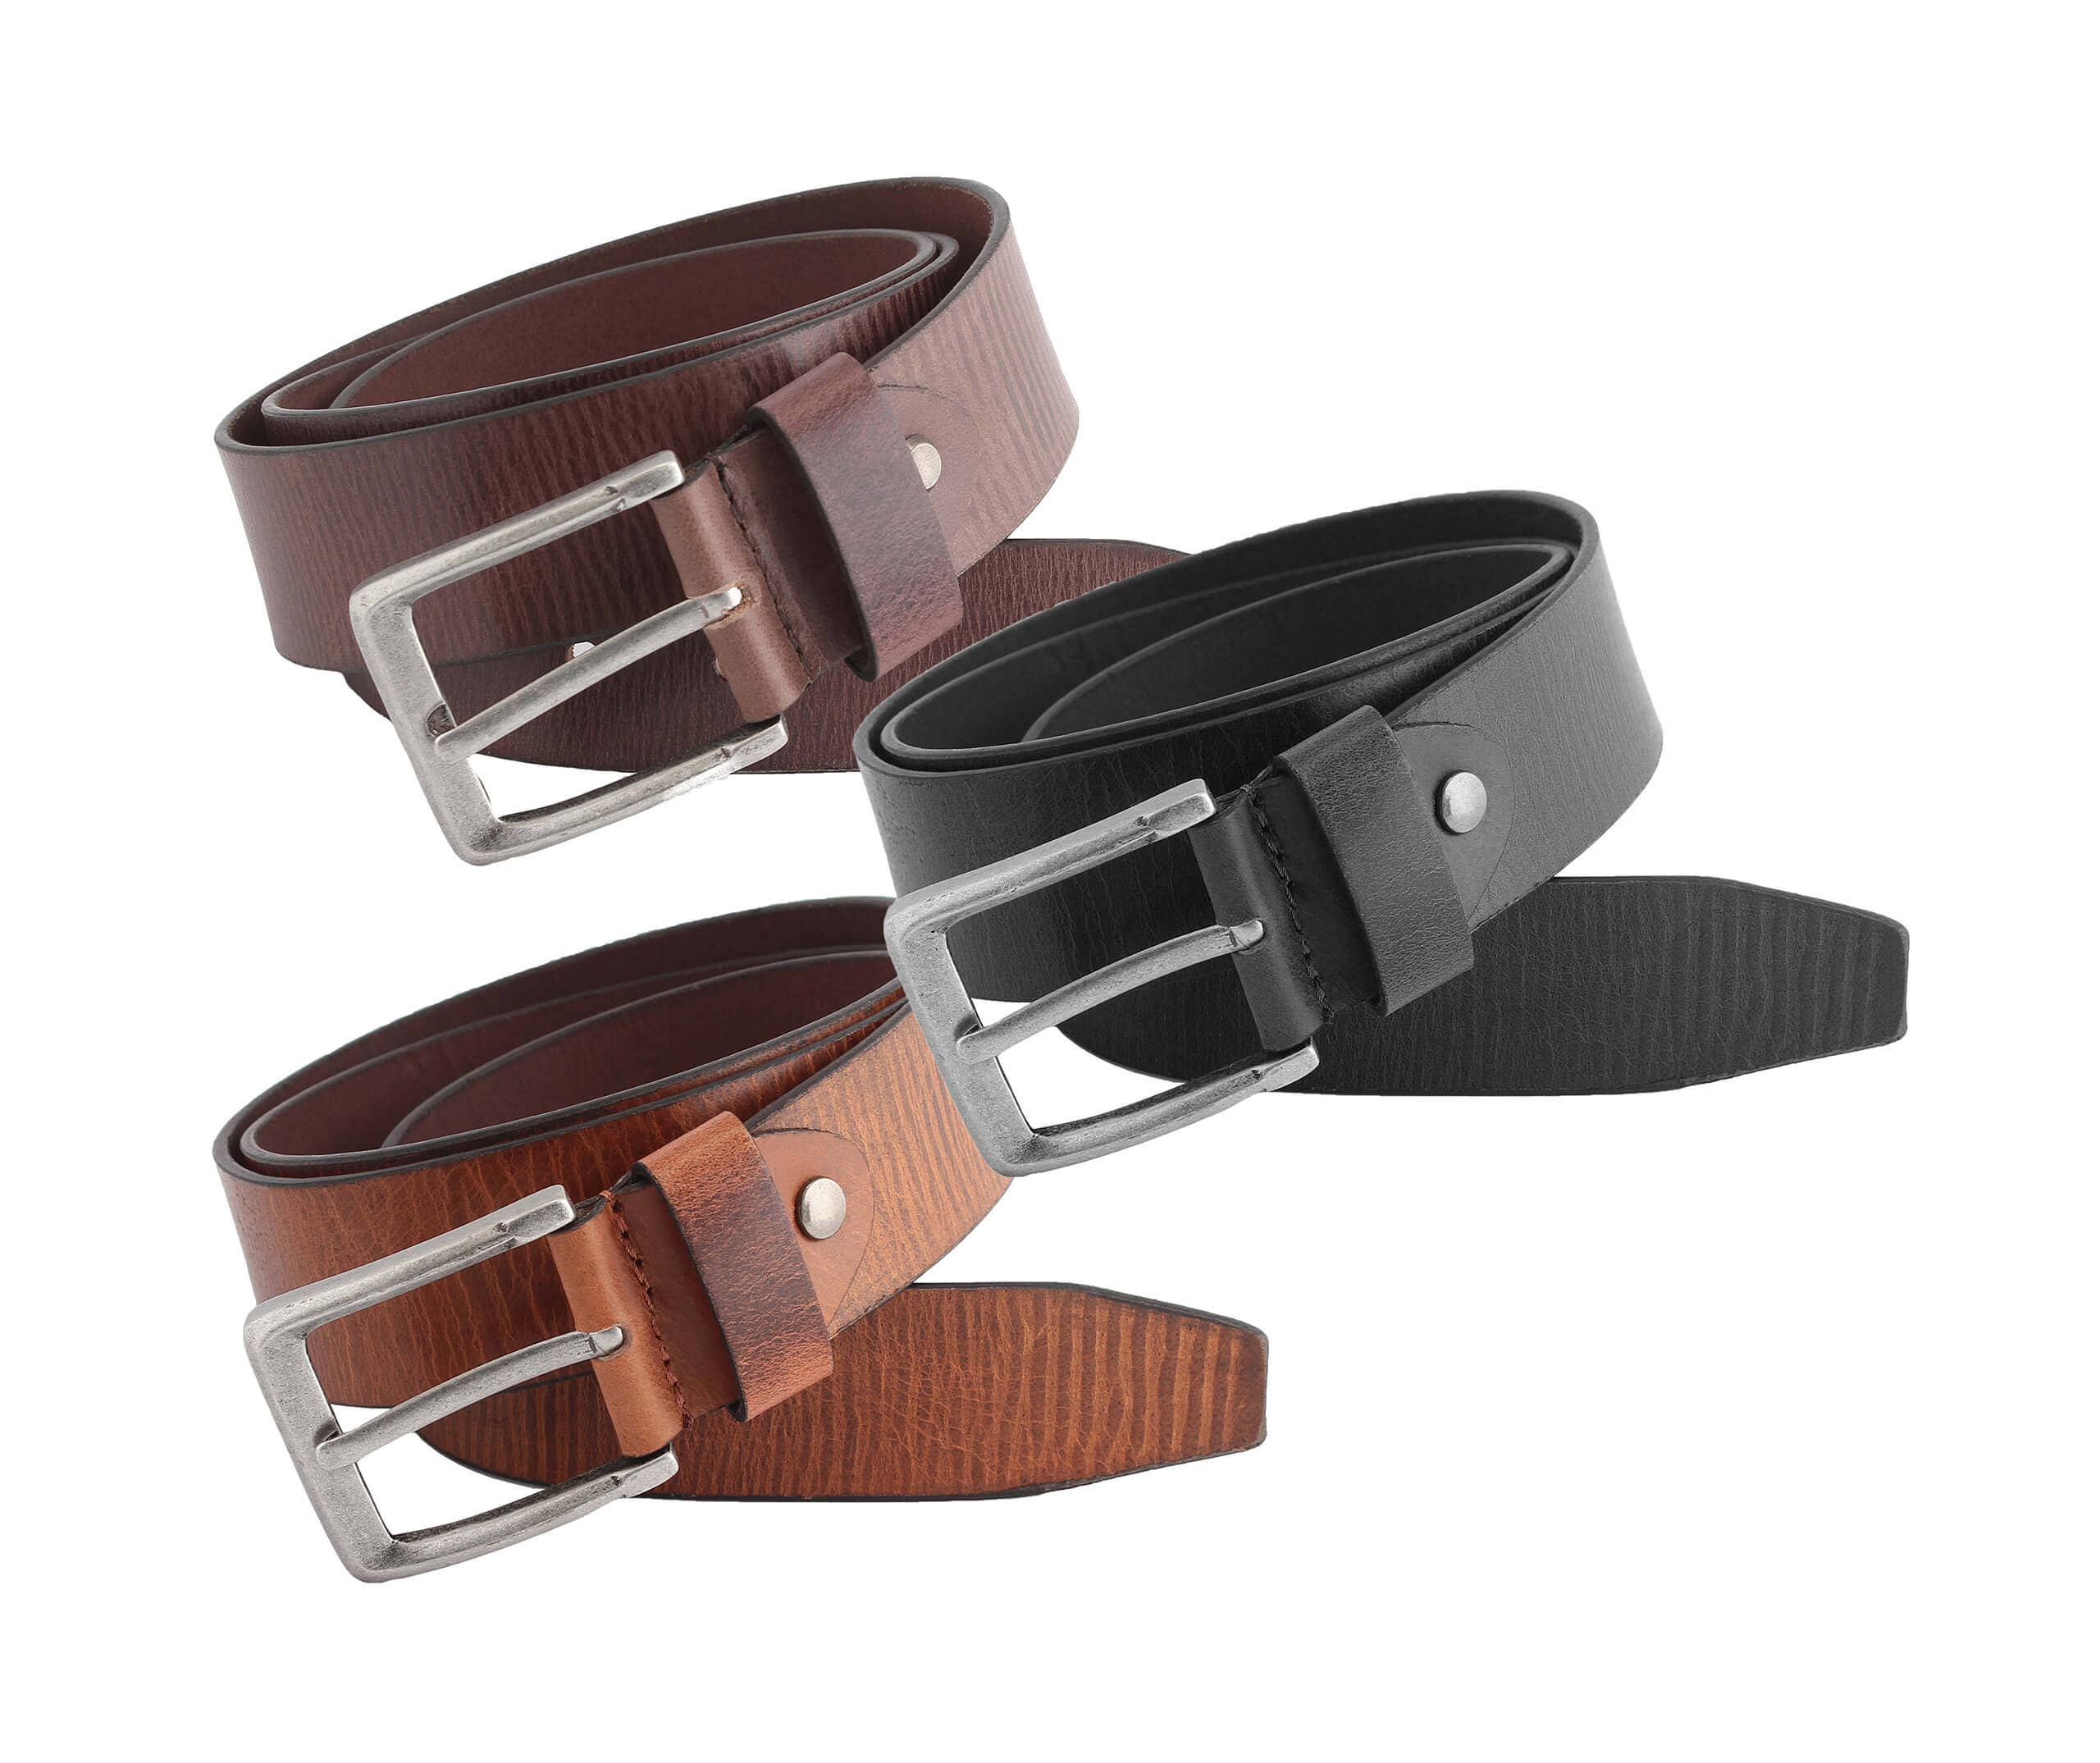 Cintura in Pelle 95 cm Unisex-Adulto Amazon Accessori Cinture e bretelle Cinture 